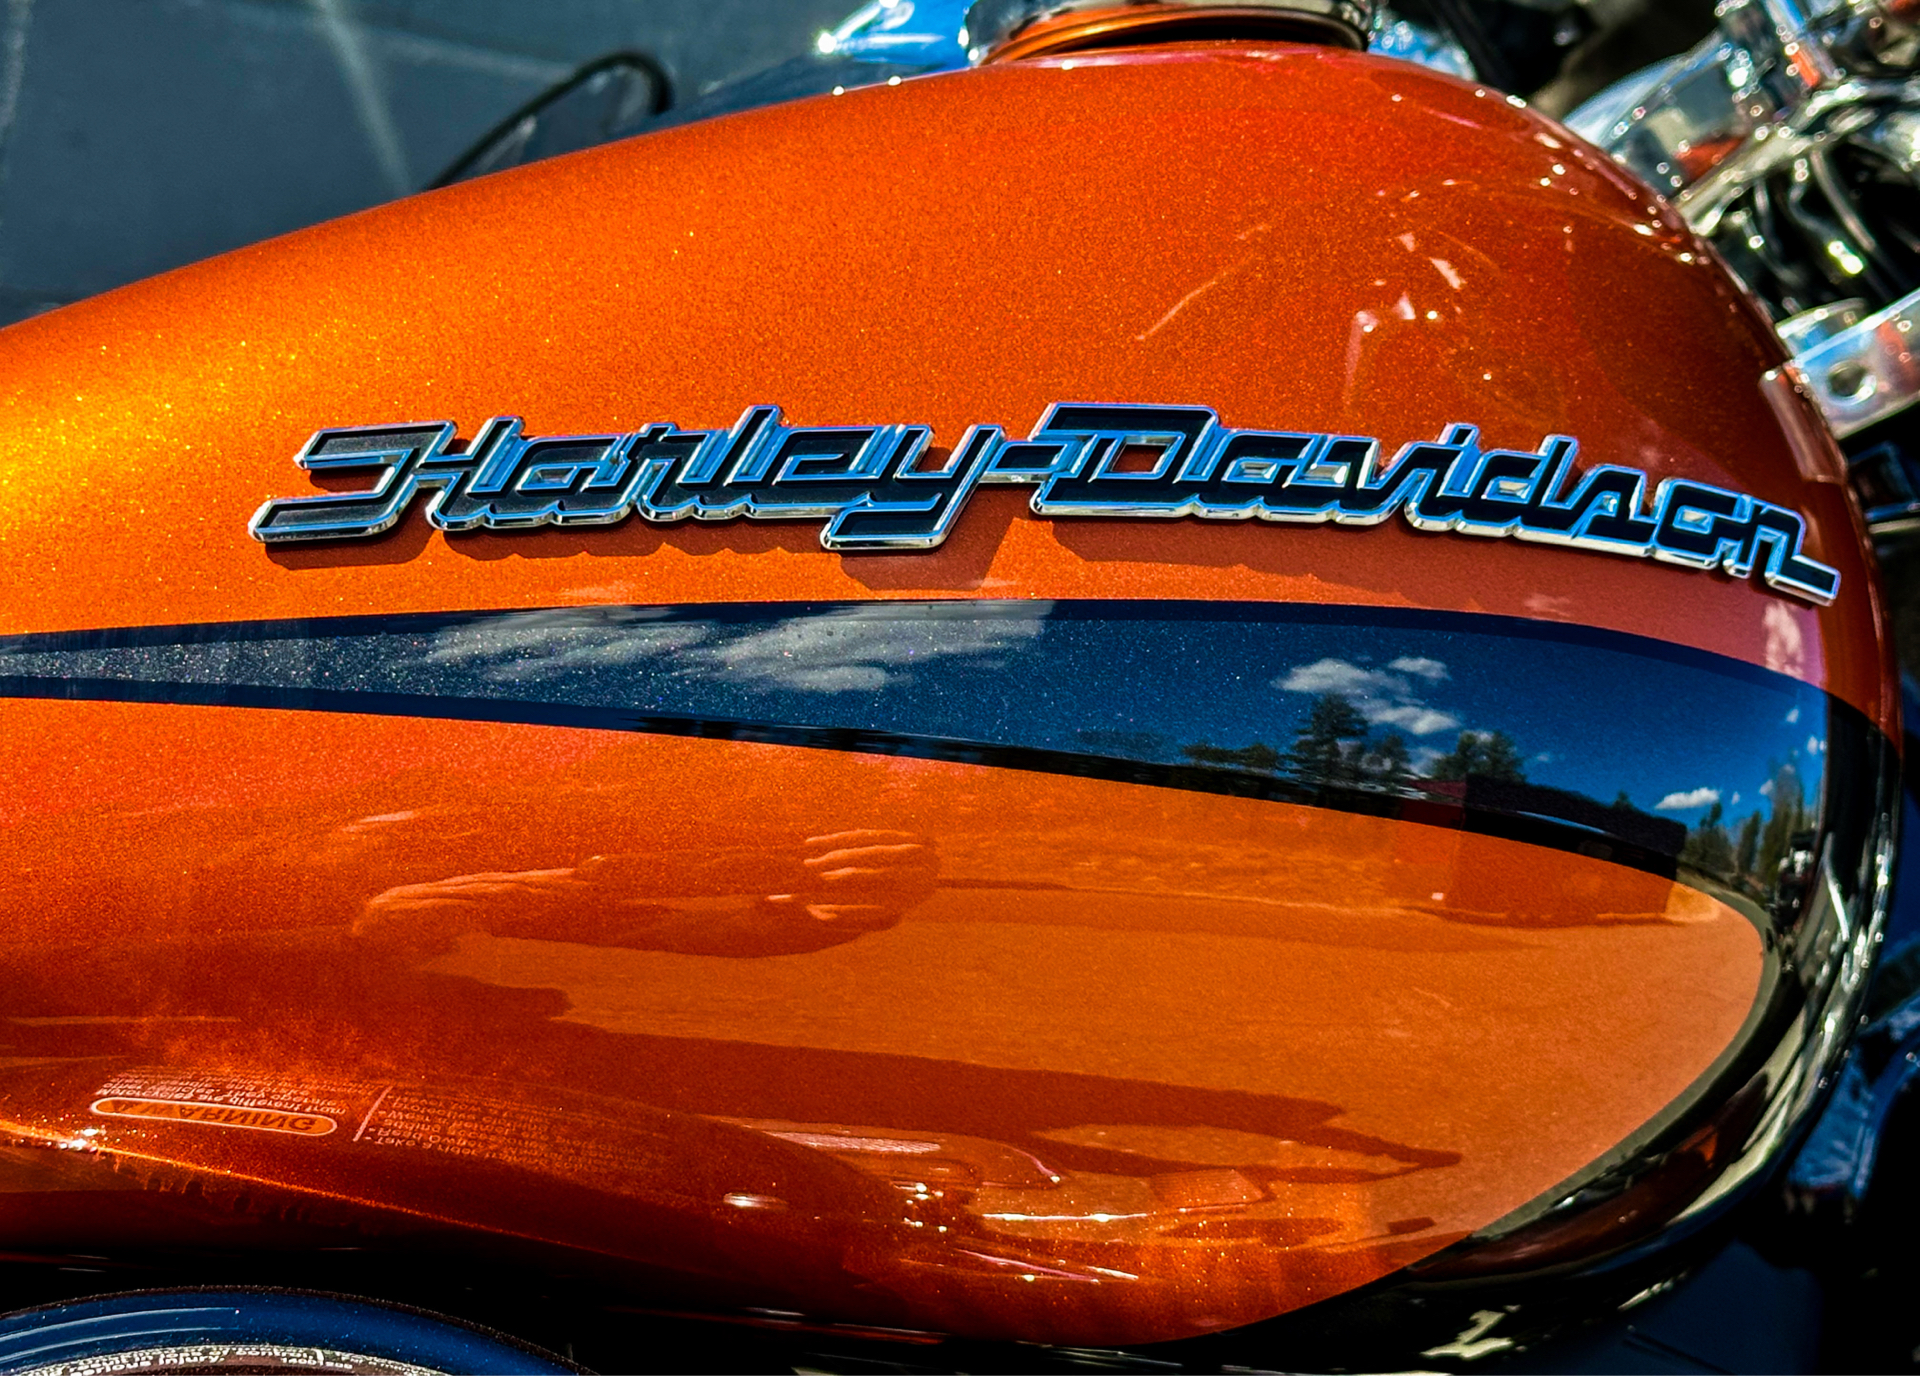 2020 Harley-Davidson Sport Glide® in Foxboro, Massachusetts - Photo 5